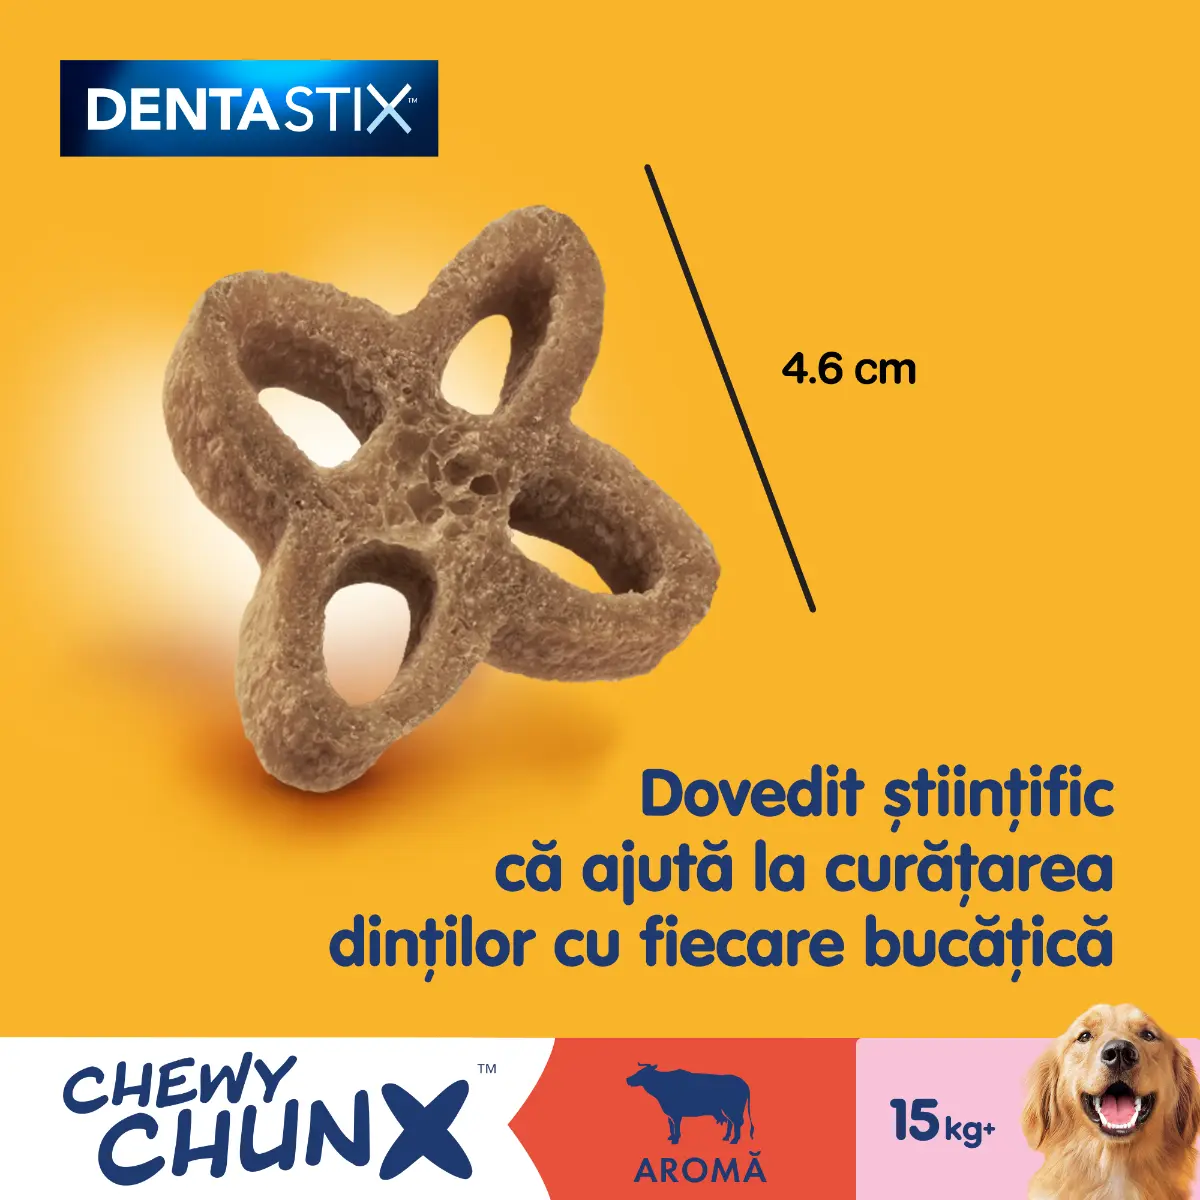 Recompense Pedigree Dentastix Chewy Chunx pentru caini de talie mare aroma de vita 68g